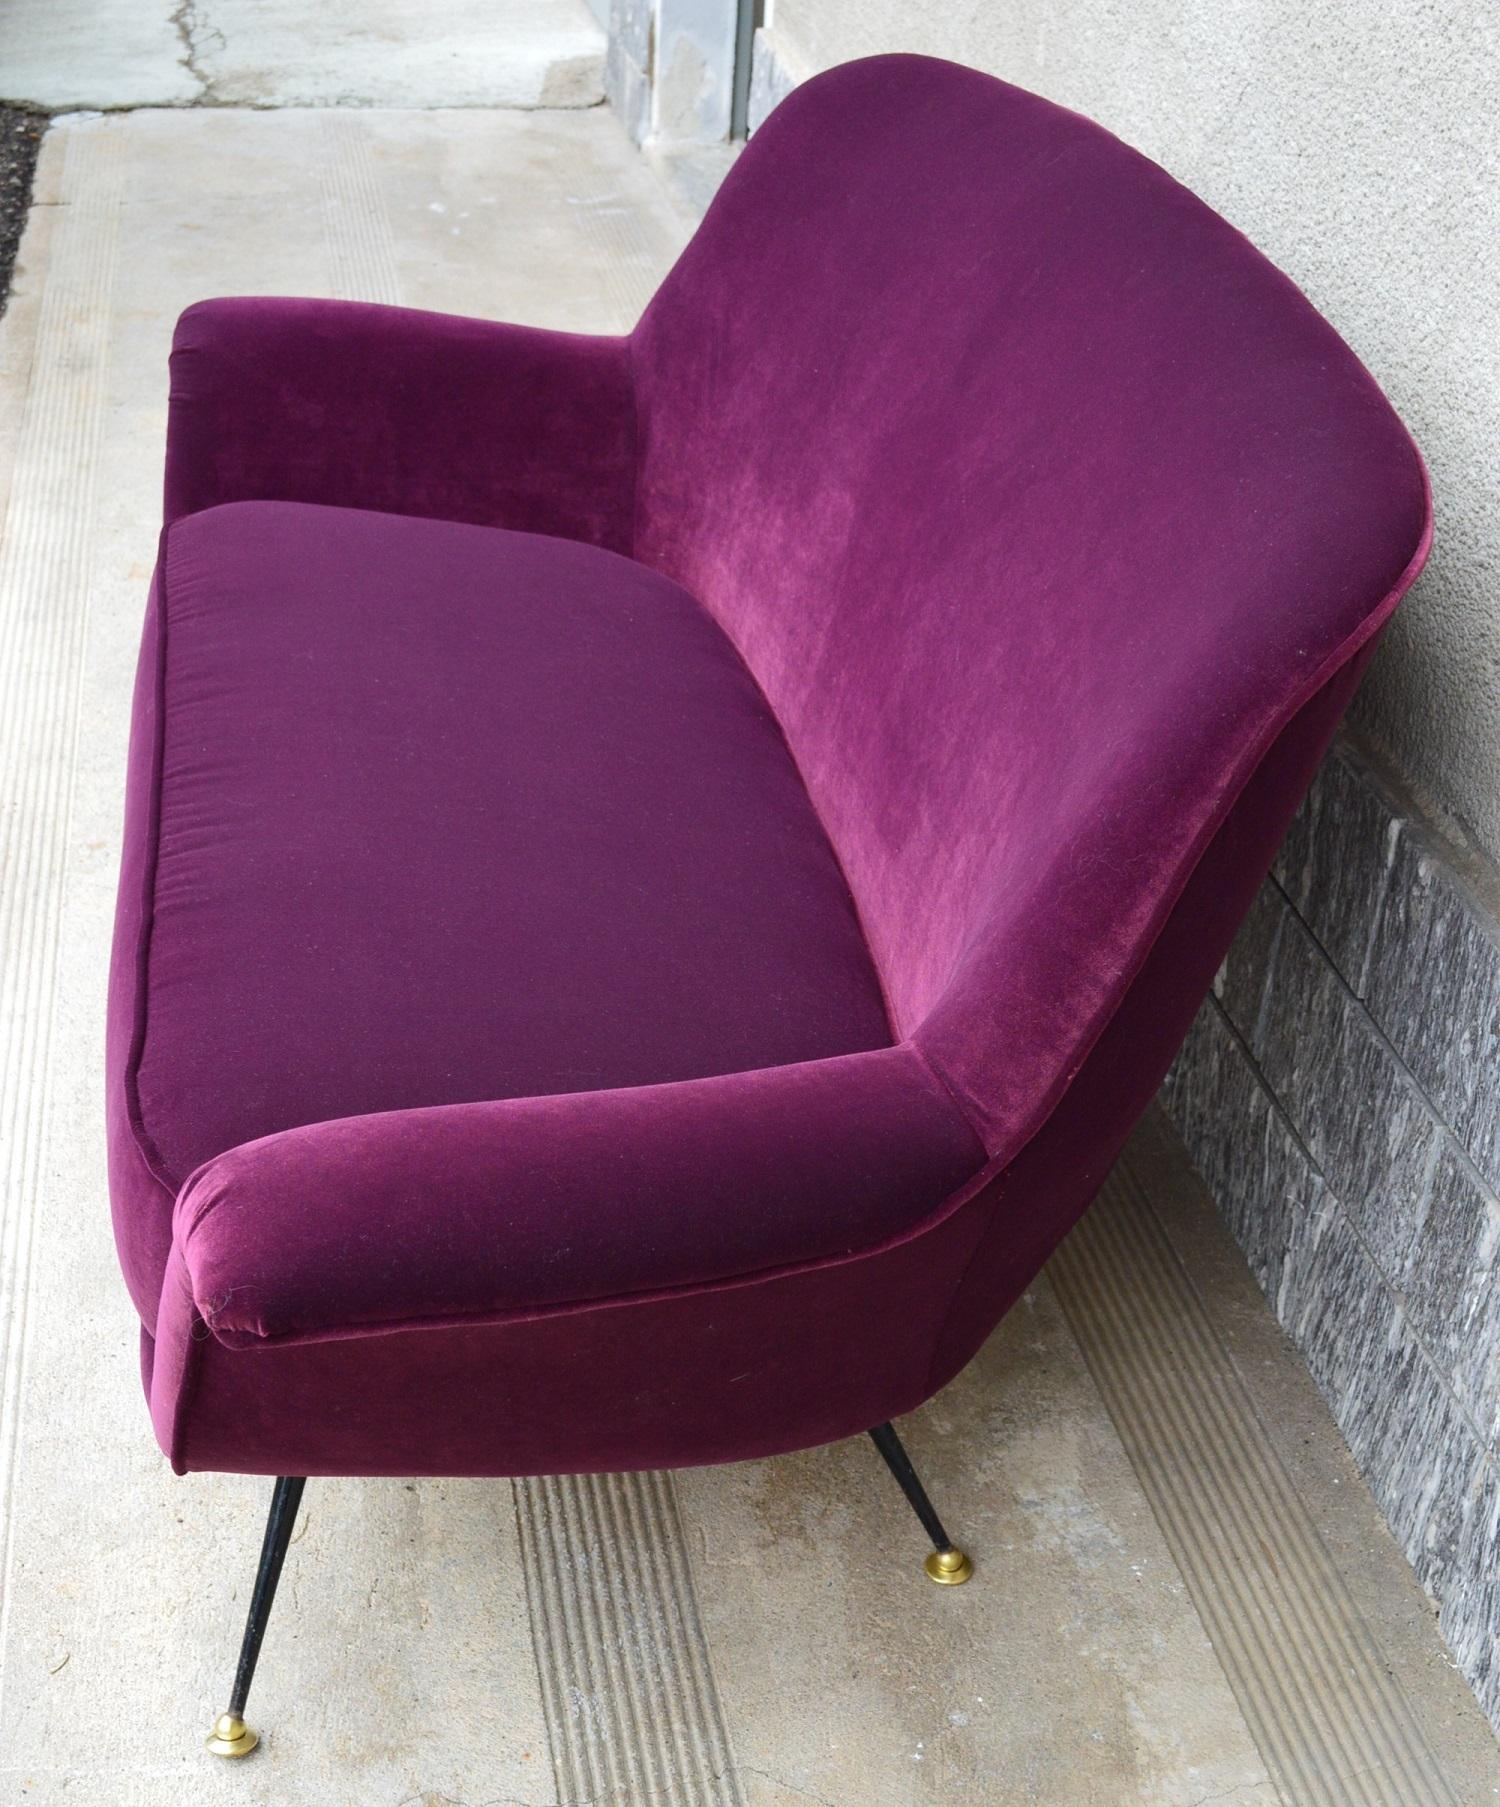 Mid-20th Century Italian Midcentury Sofa or Loveseat in New Purple Velvet, 1950s